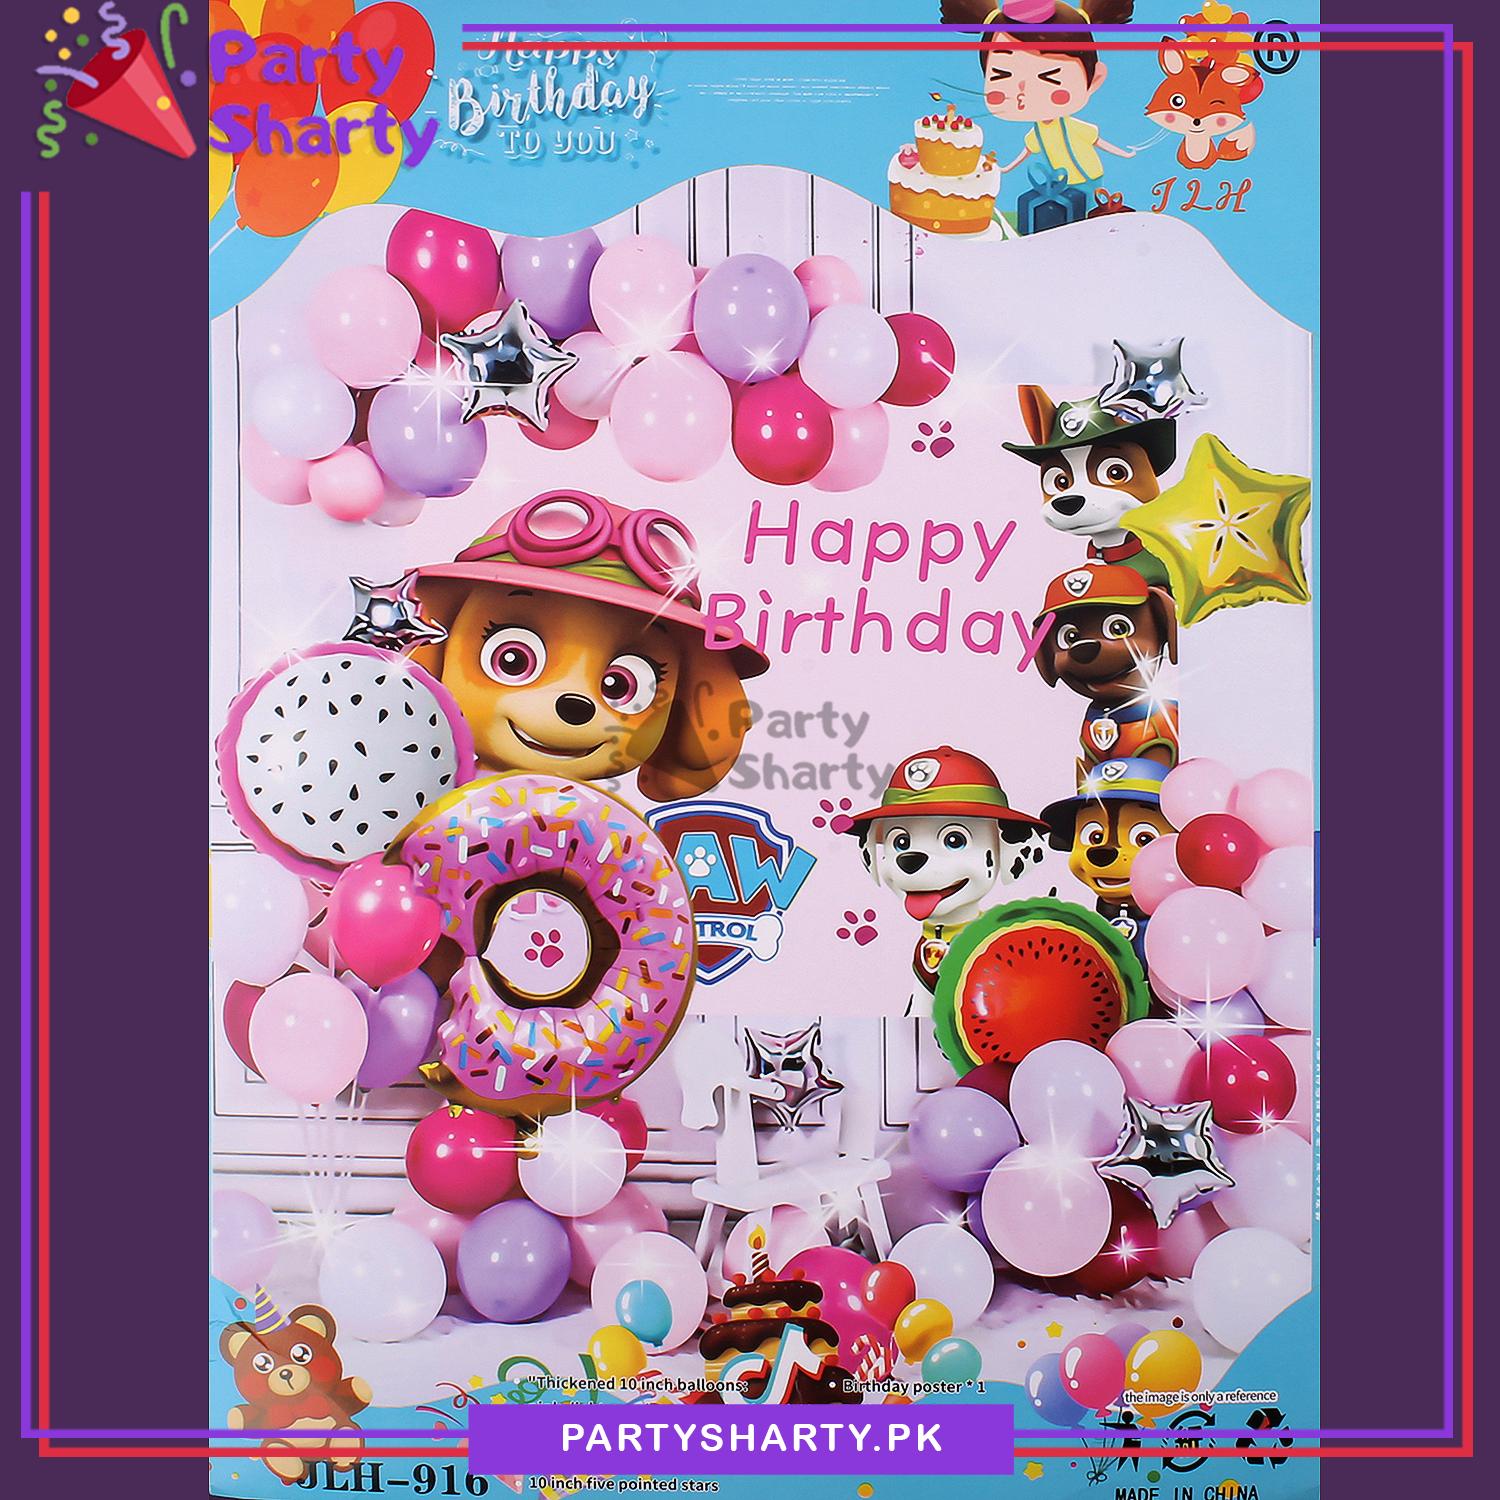 Happy Birthday Pink Paw Patrol Theme Set for Theme Based Birthday Decoration and Celebration